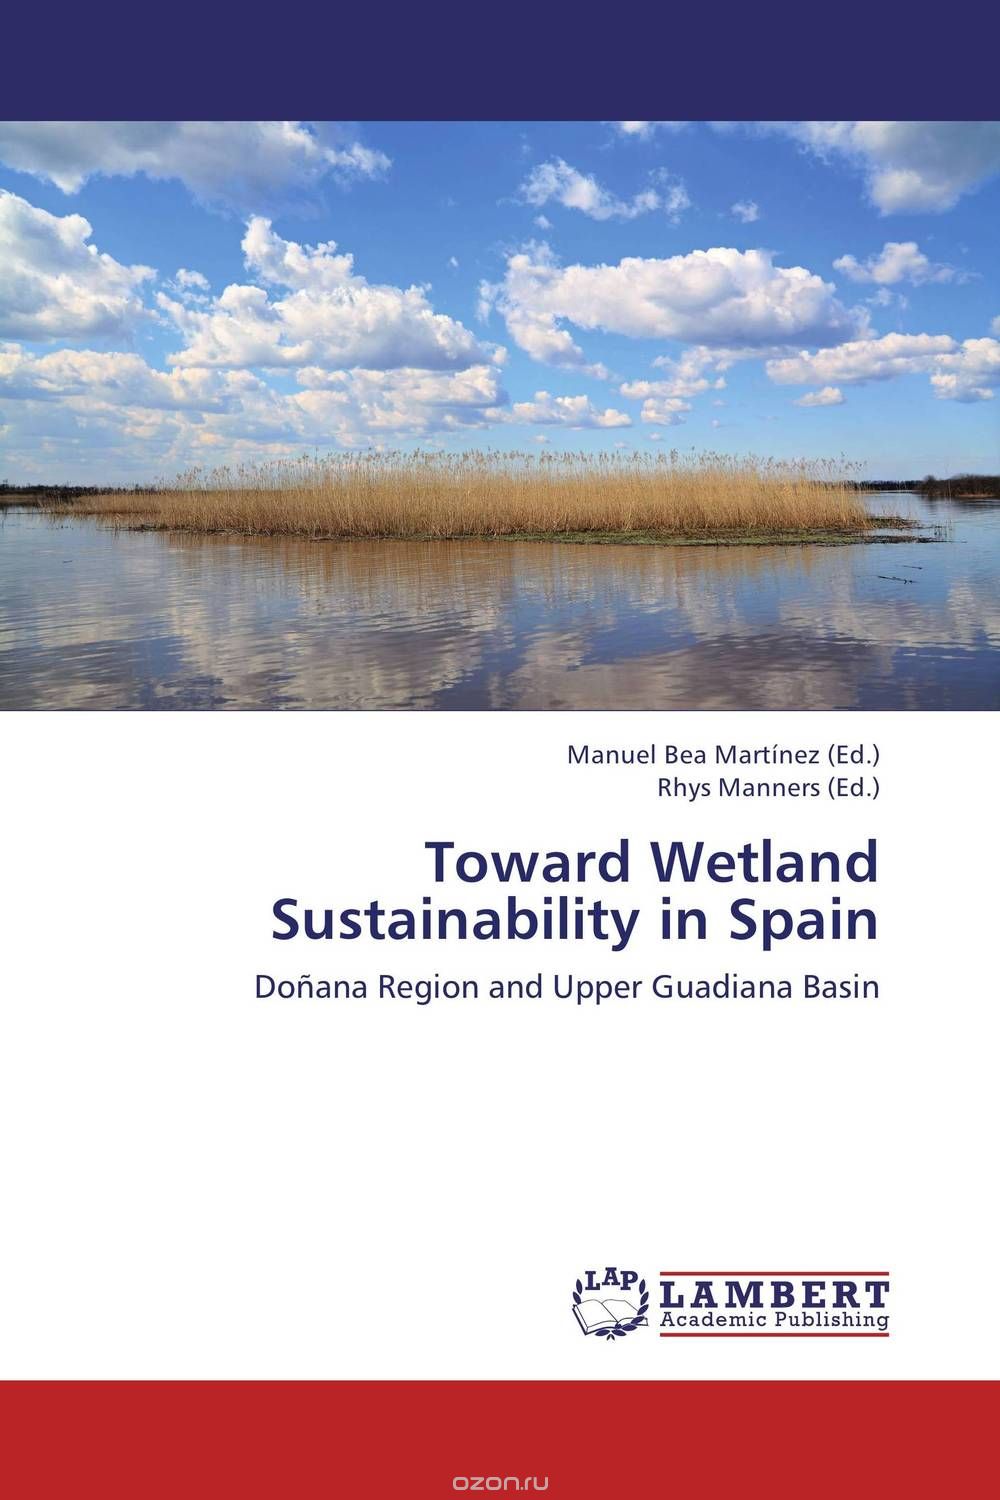 Скачать книгу "Toward Wetland Sustainability in Spain"